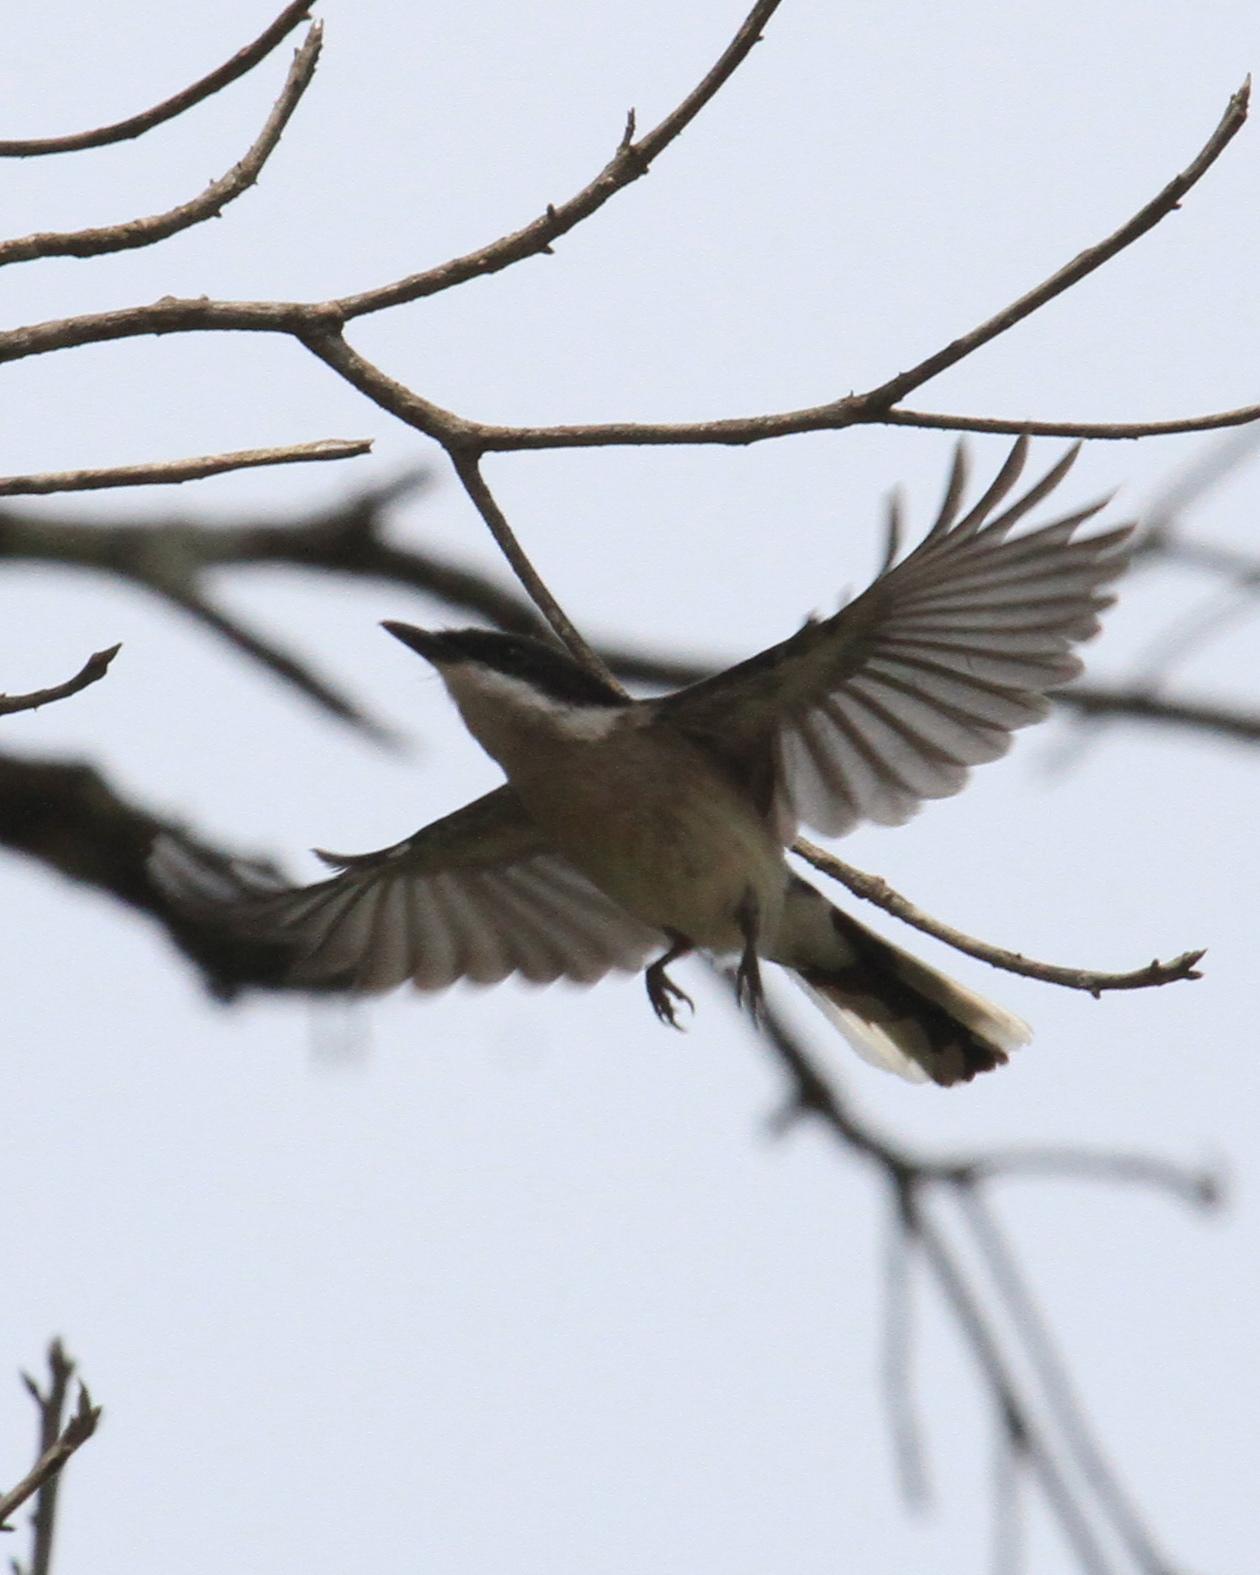 Bar-winged Flycatcher-shrike Photo by Monte Taylor